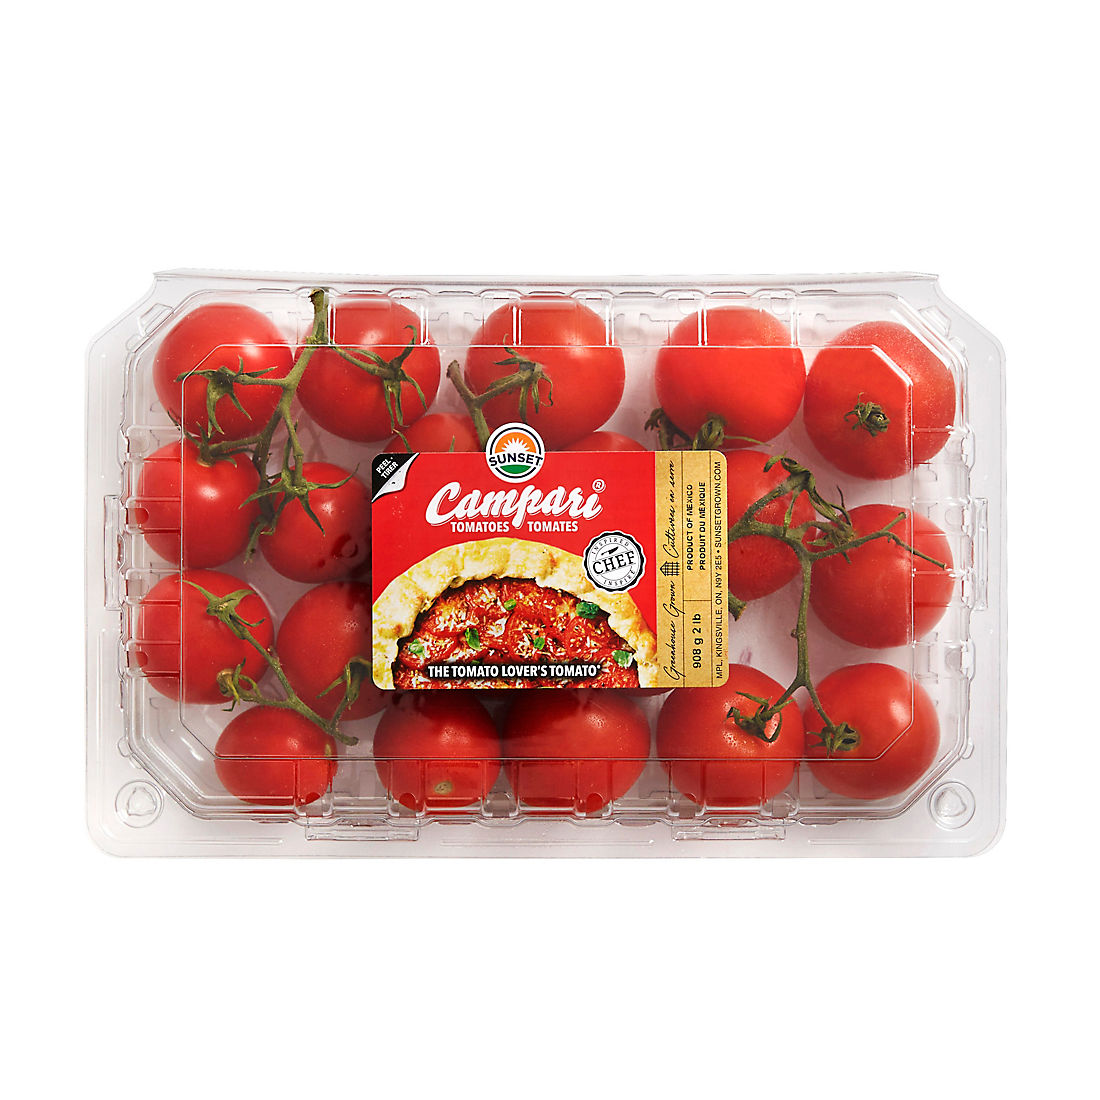 Campari Tomatoes, 2 lbs.